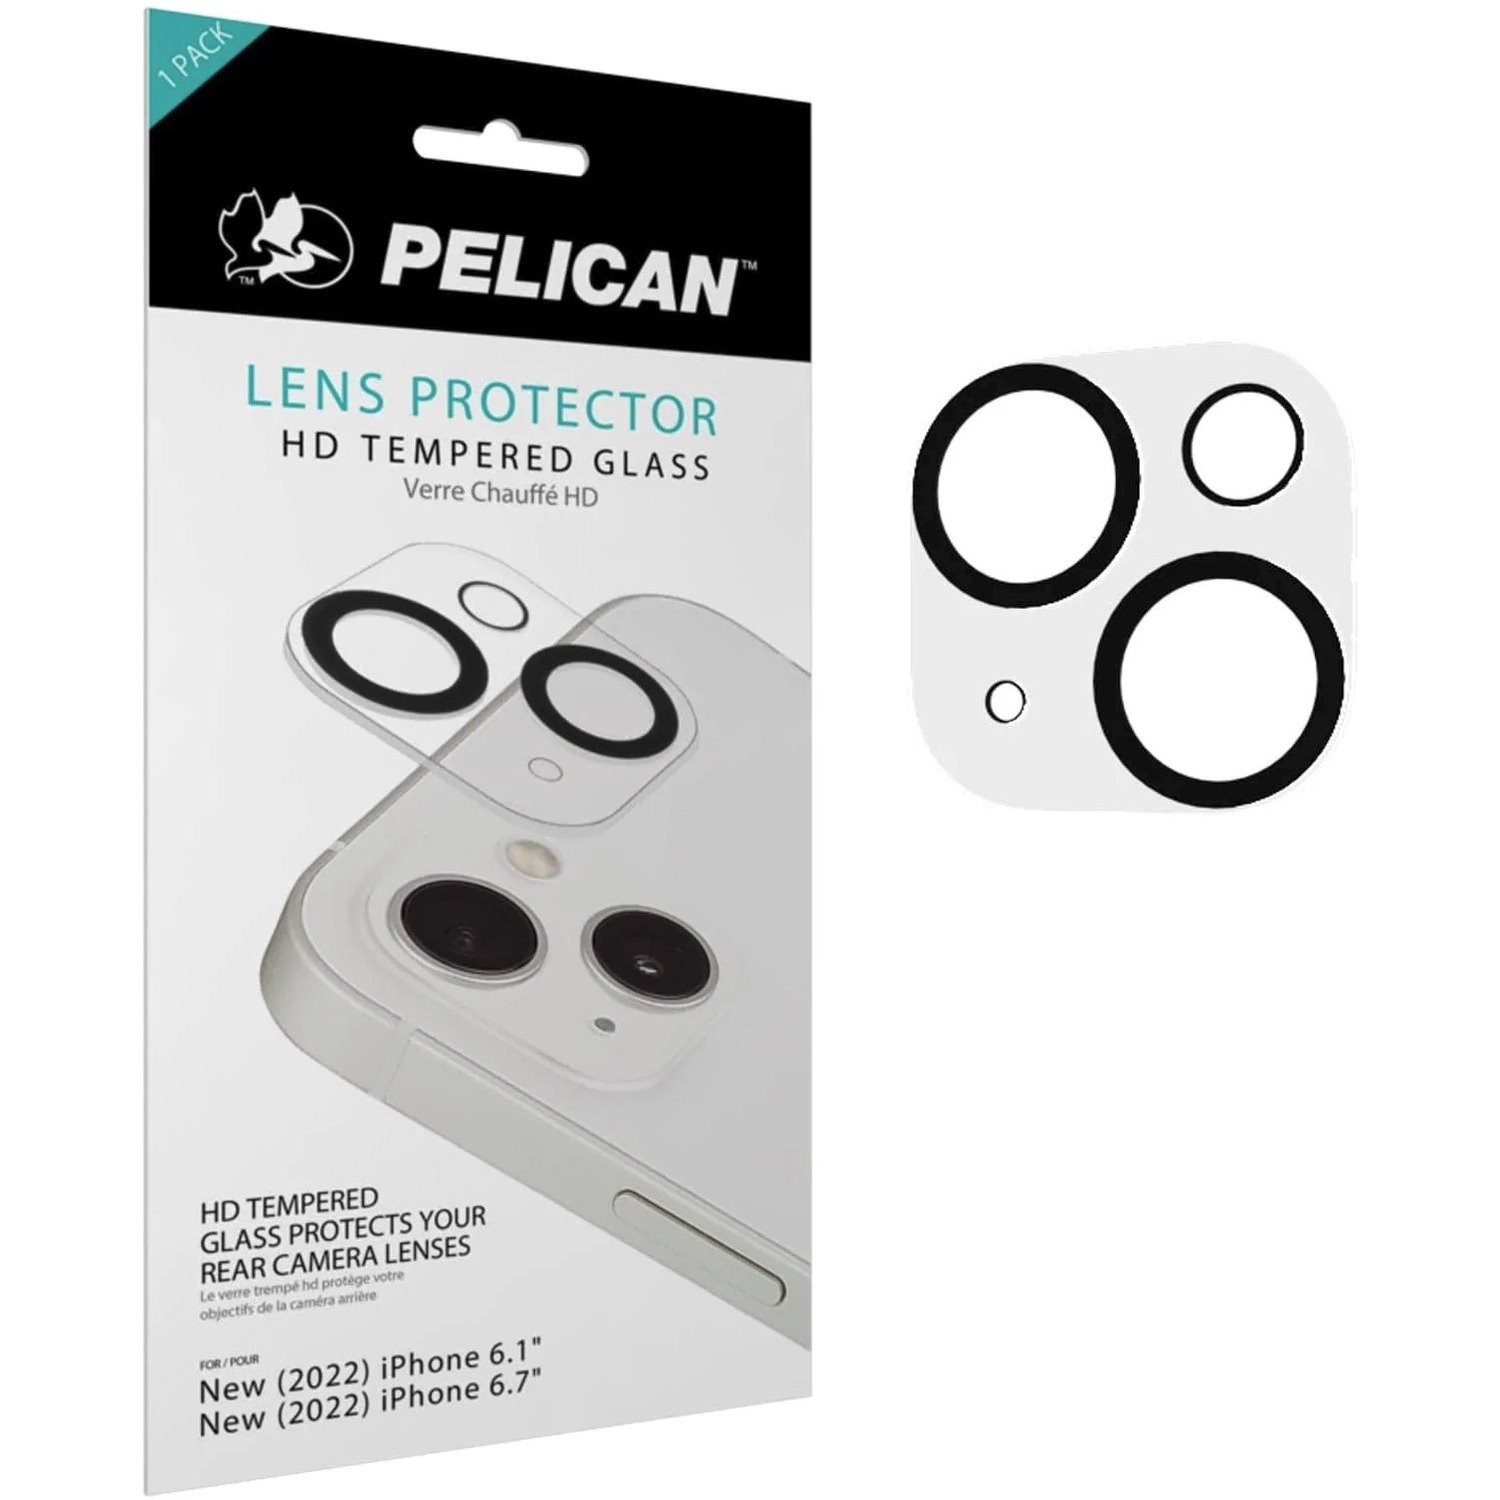 Pelican Lens Protector